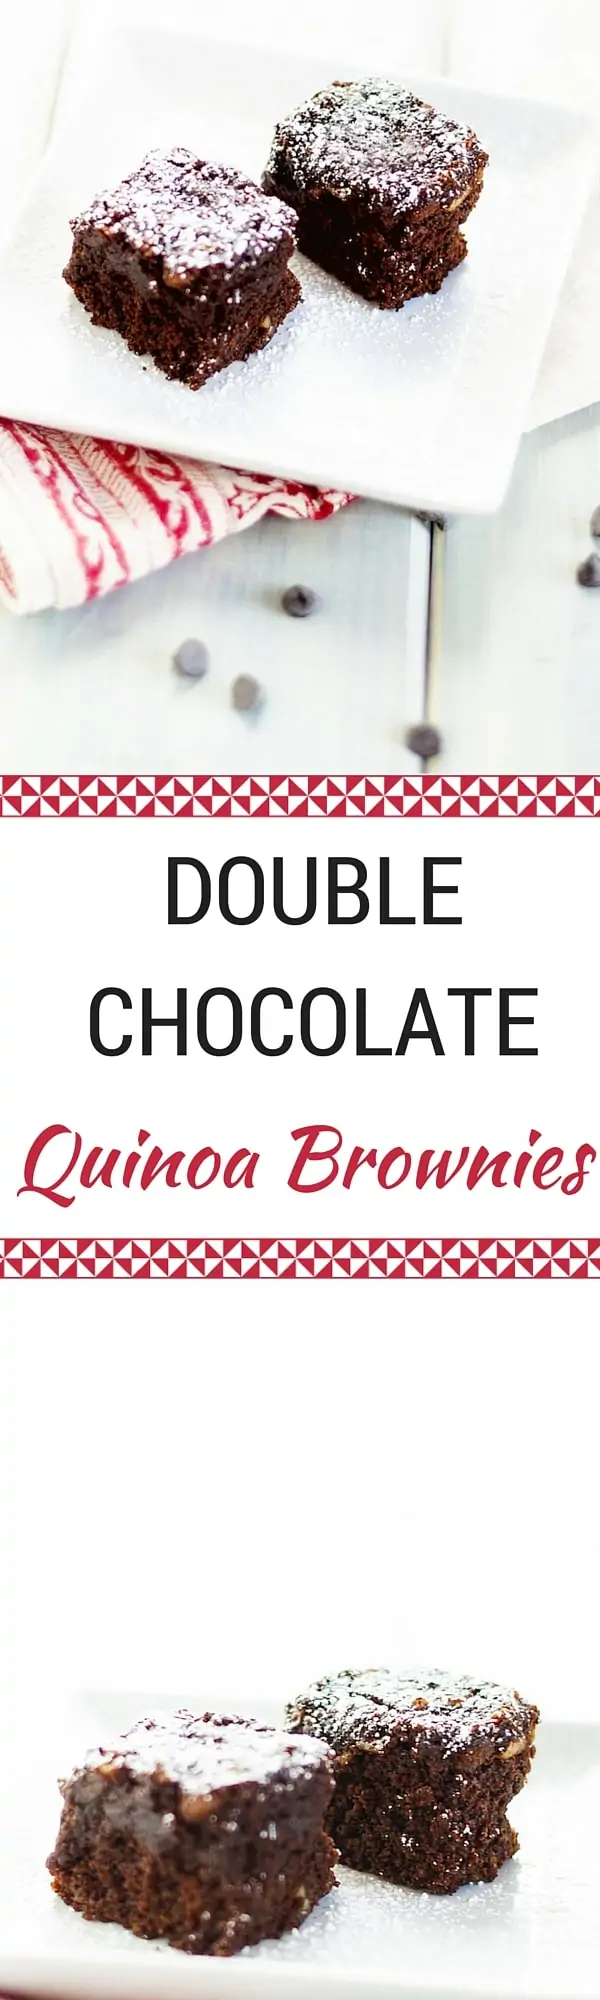 Double Chocolate Quinoa Brownies